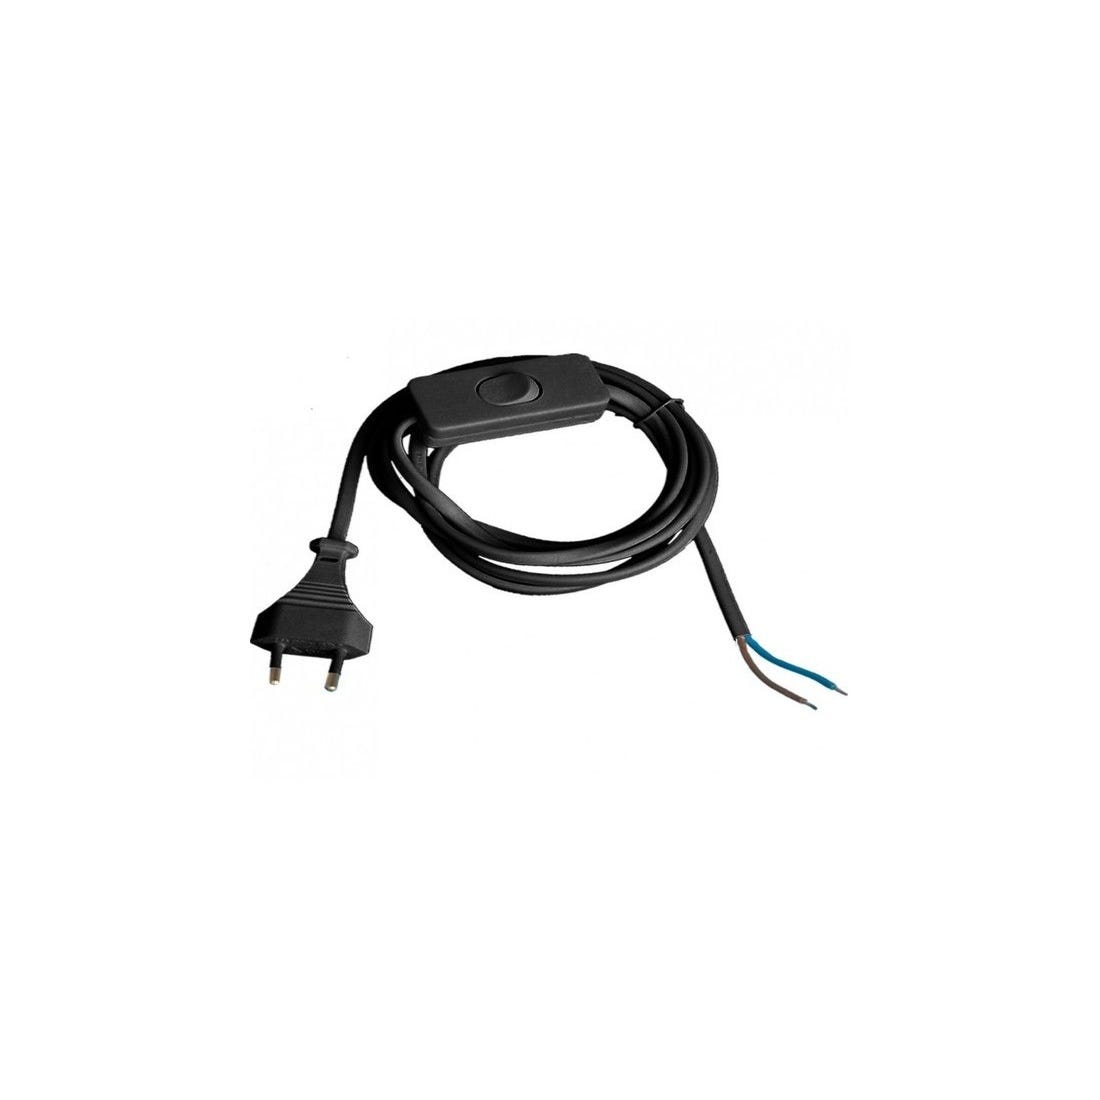 Enchufe con Cable de 1,5M Color Negro